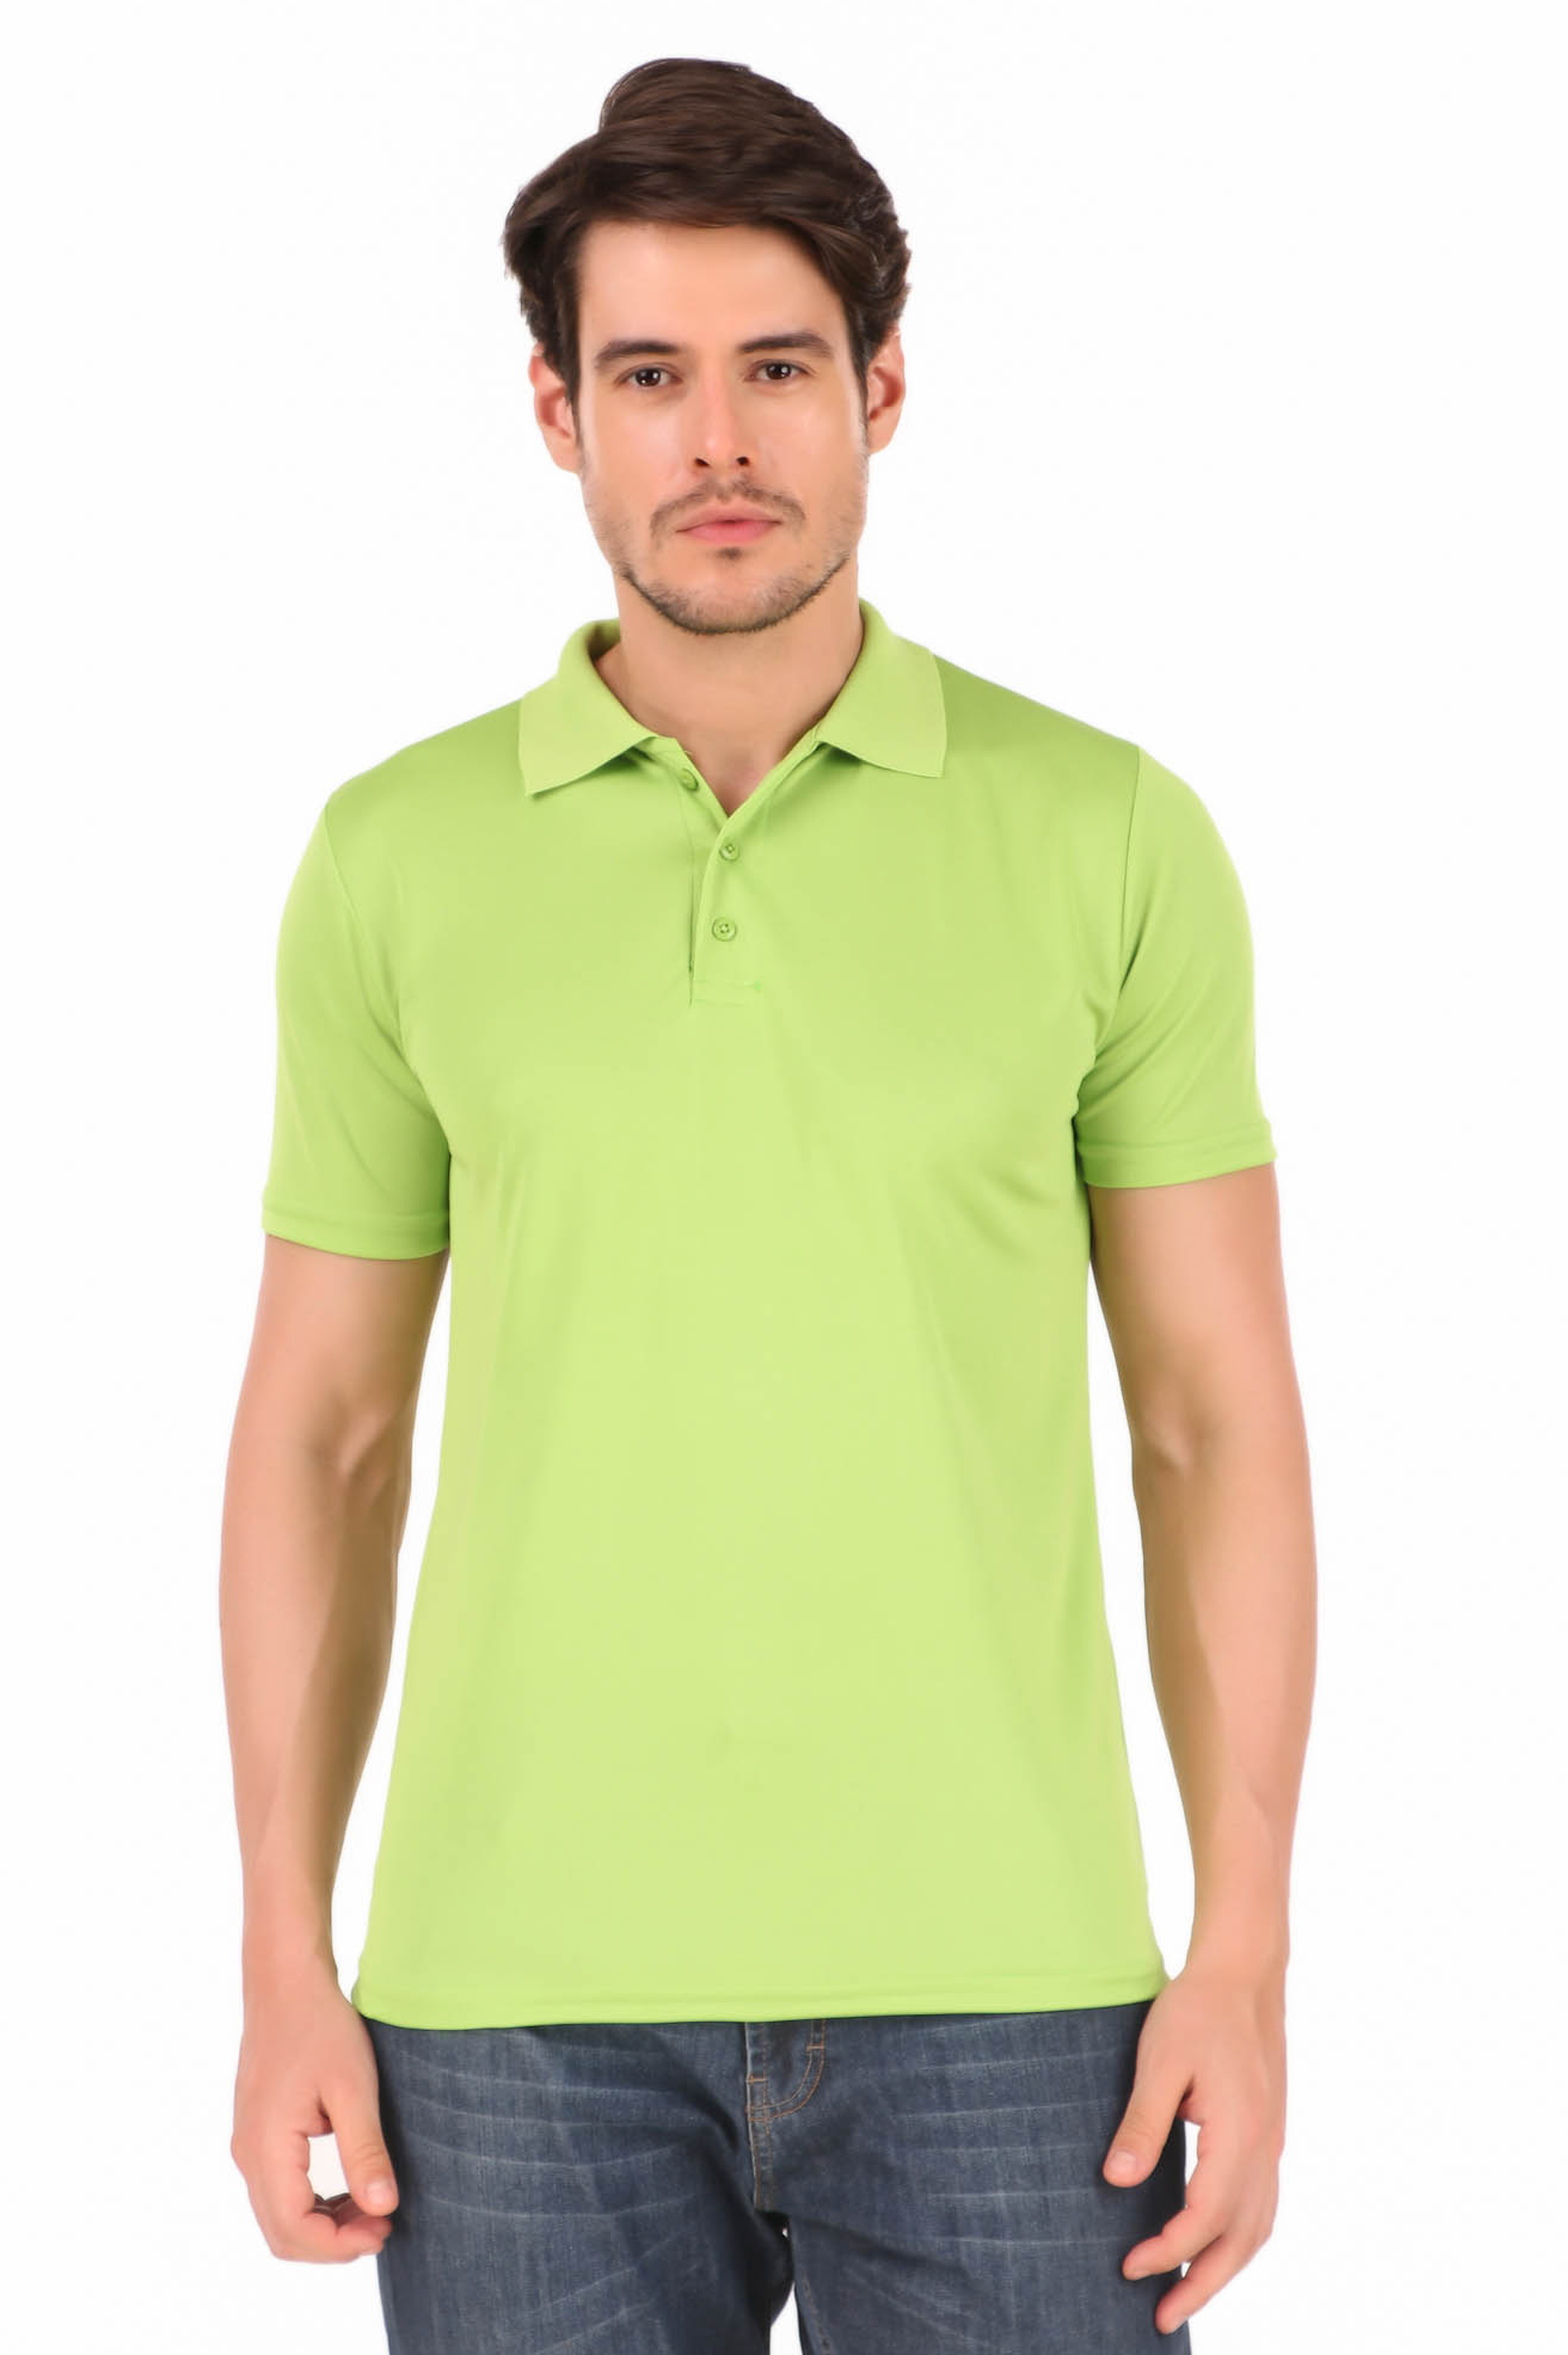 Dry Fit Lime Color T-shirt